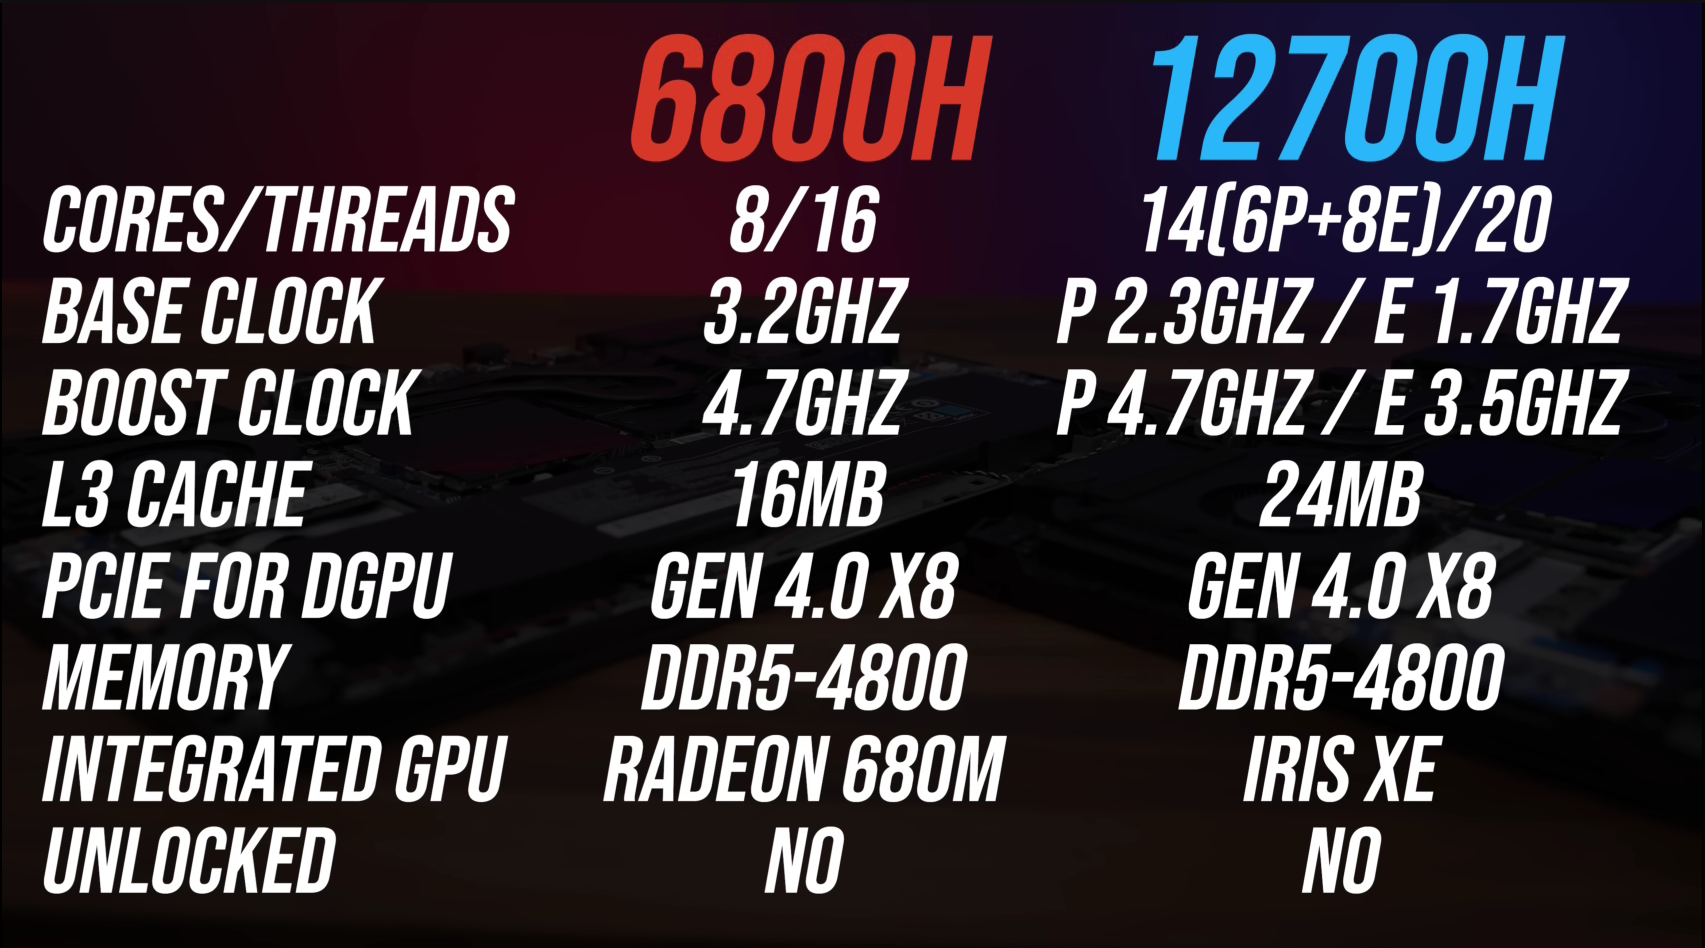 Intel 12th Gen Core i7-12700H vs AMD Ryzen 6900HX/6800H